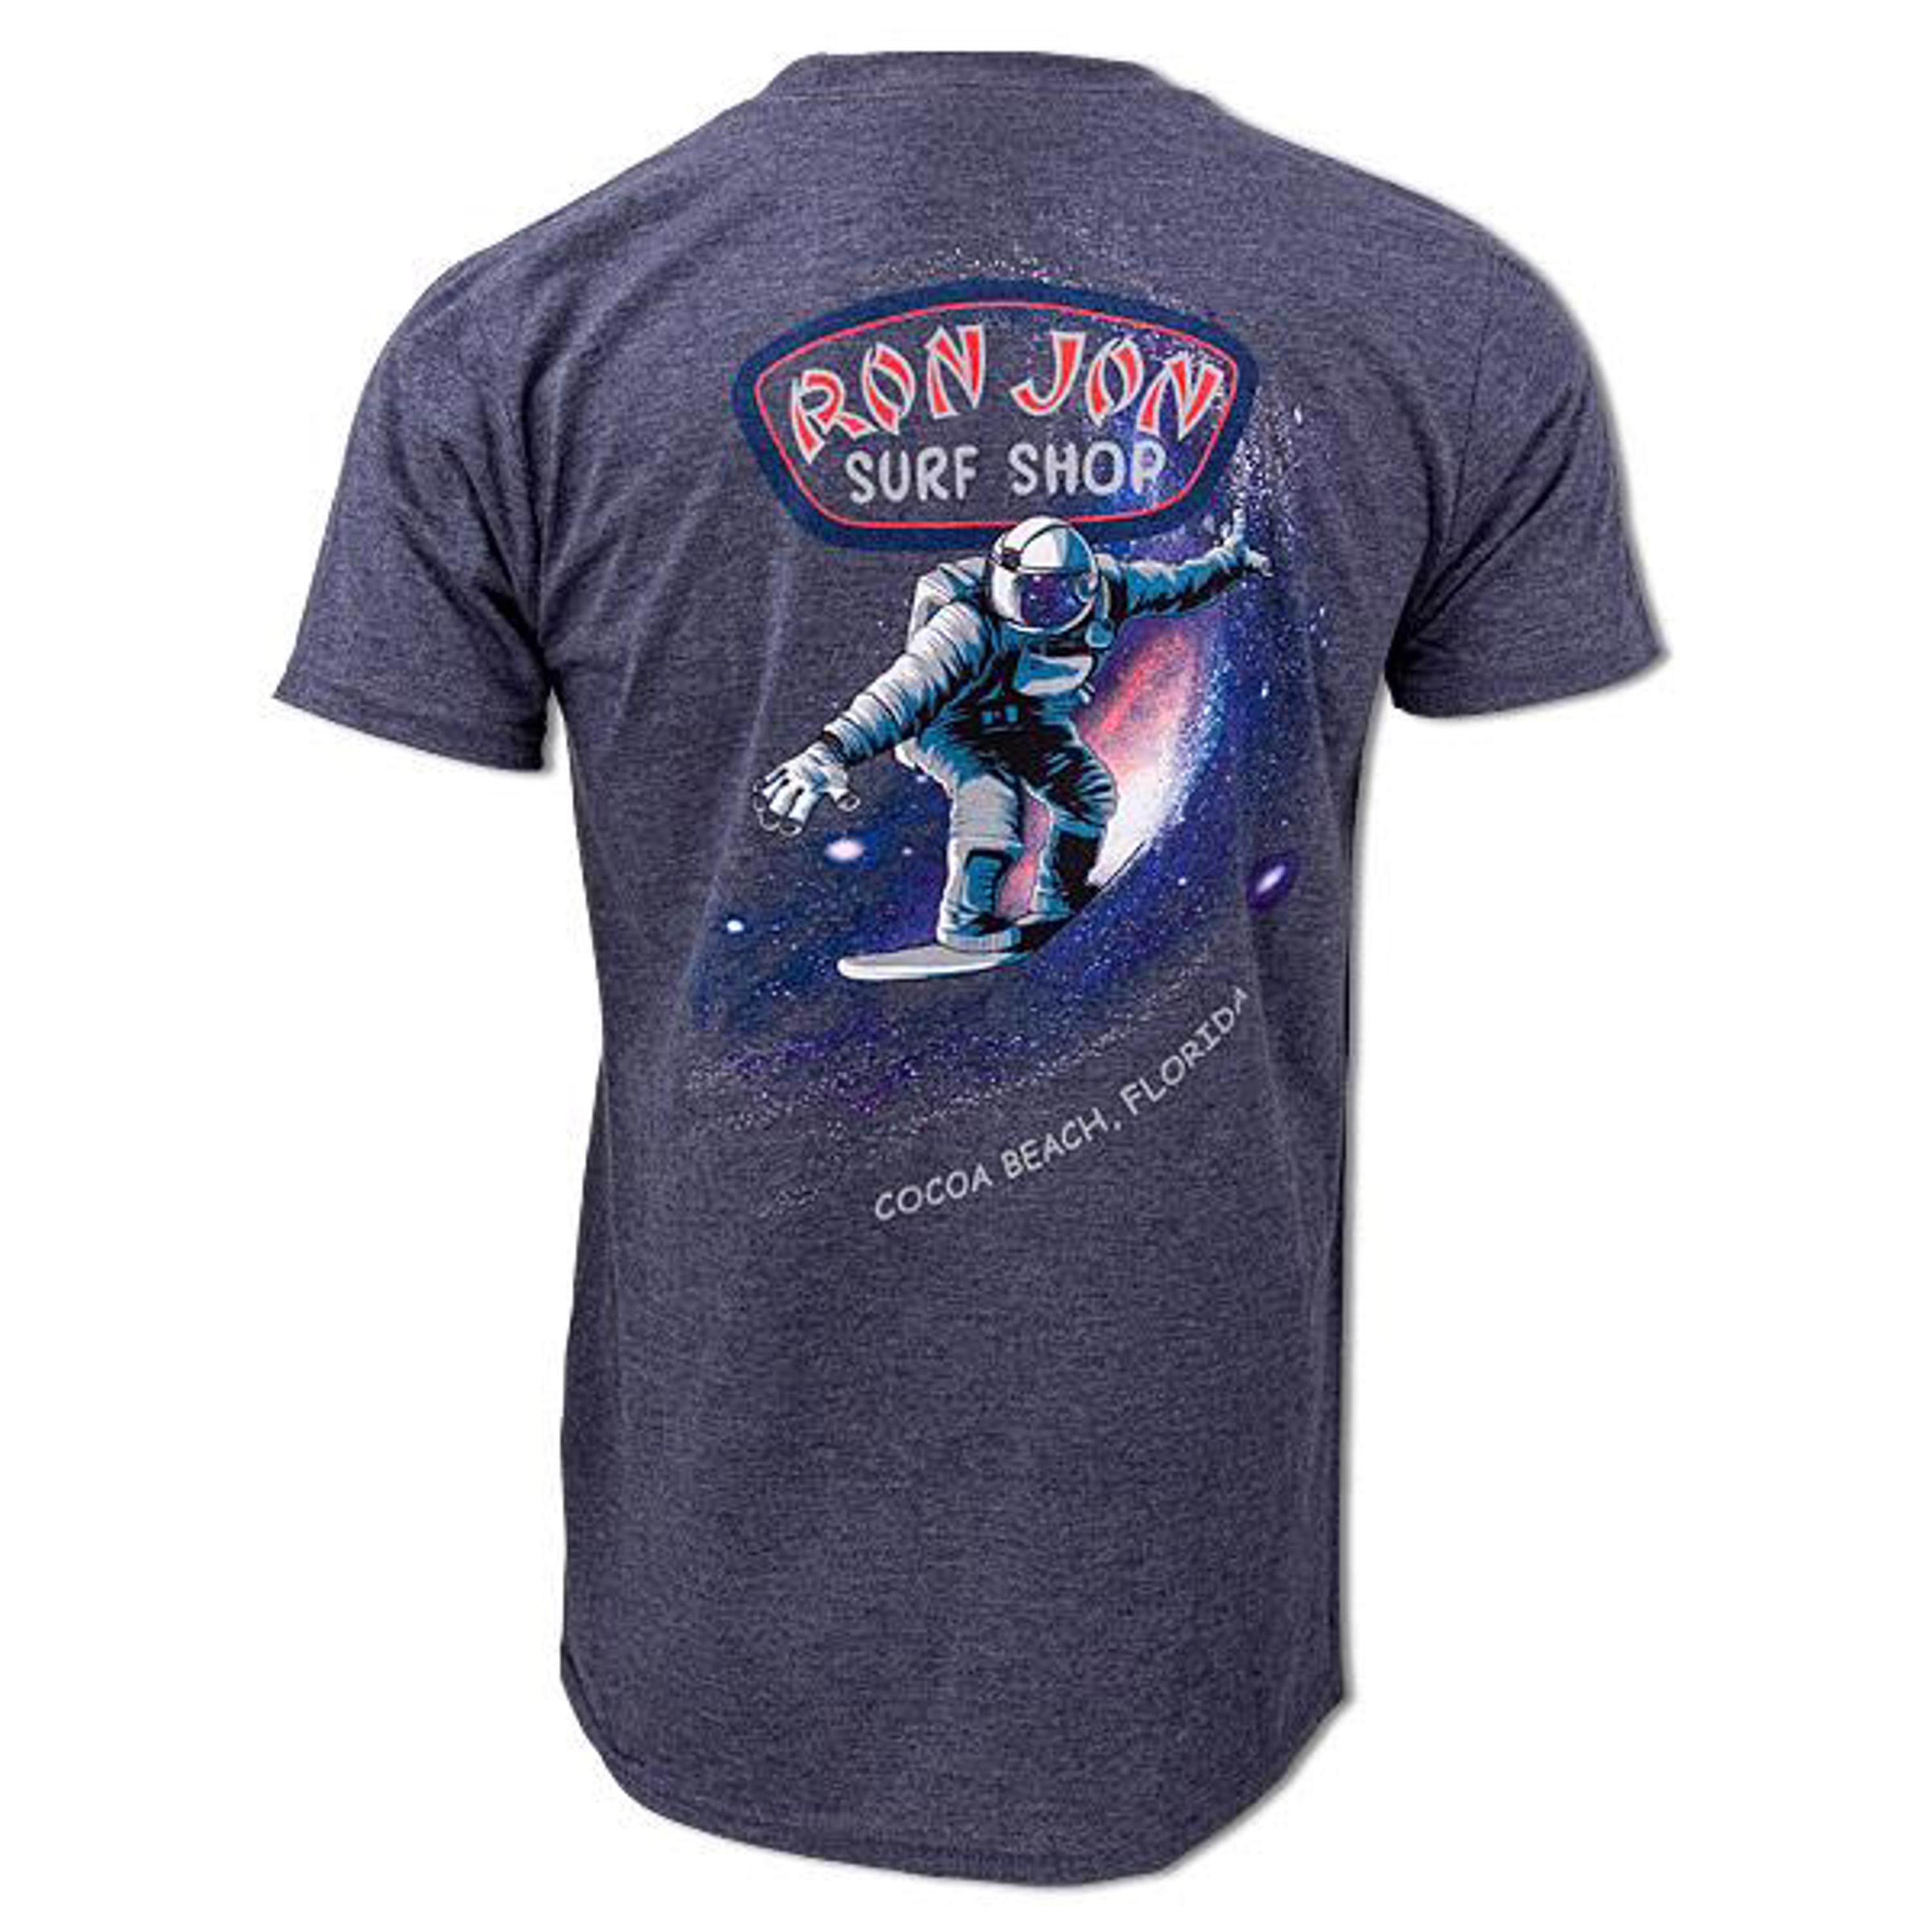 Ron Jon Astronaut Surfer Tee - Mens Apparel